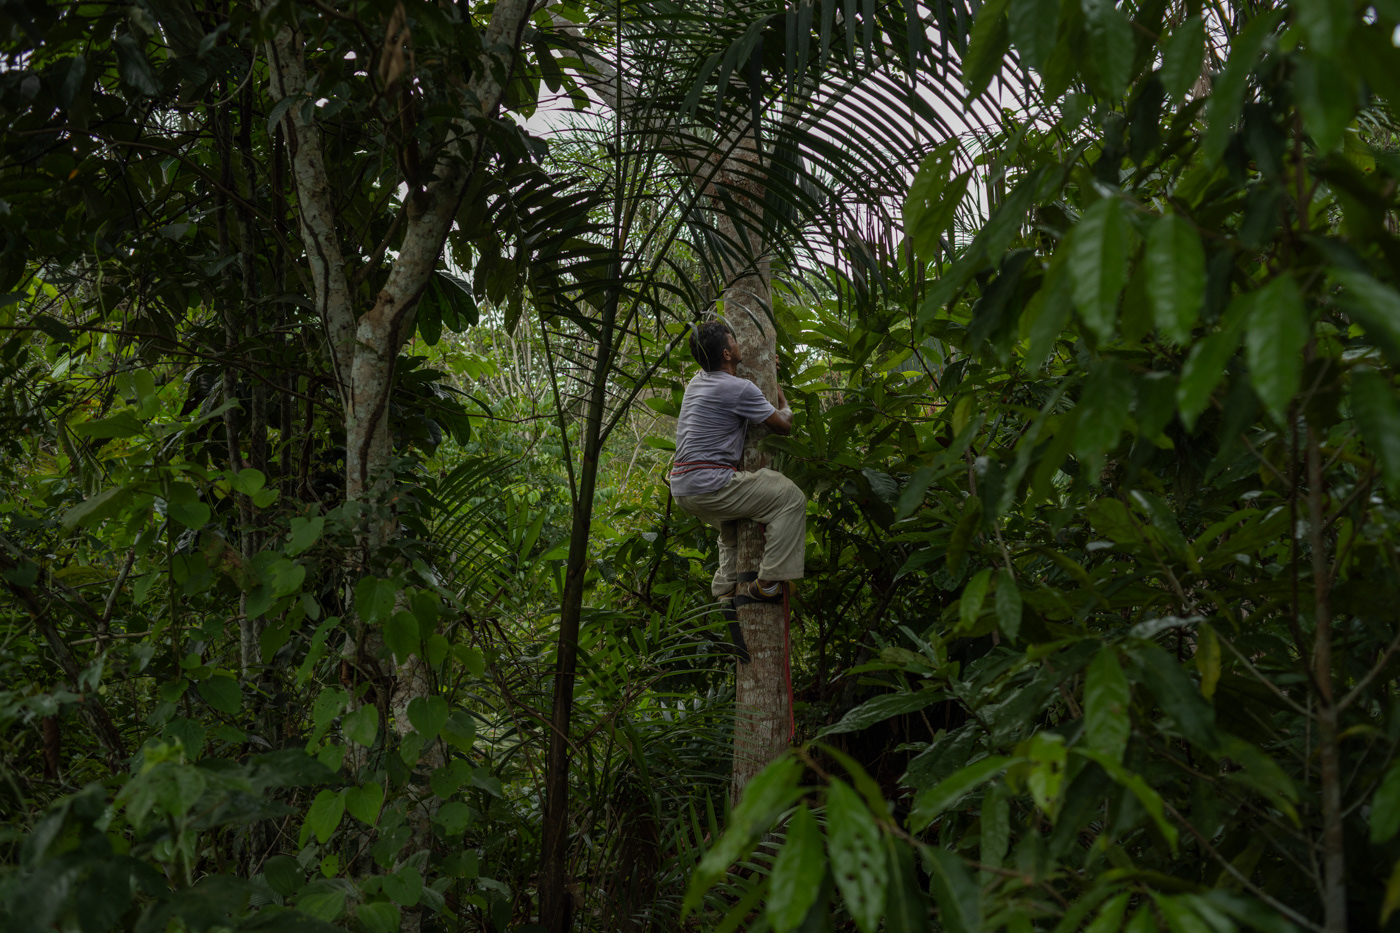 Amazon Amazon Product rainforest people climate change environment global warming Reforestation forest Sustainability